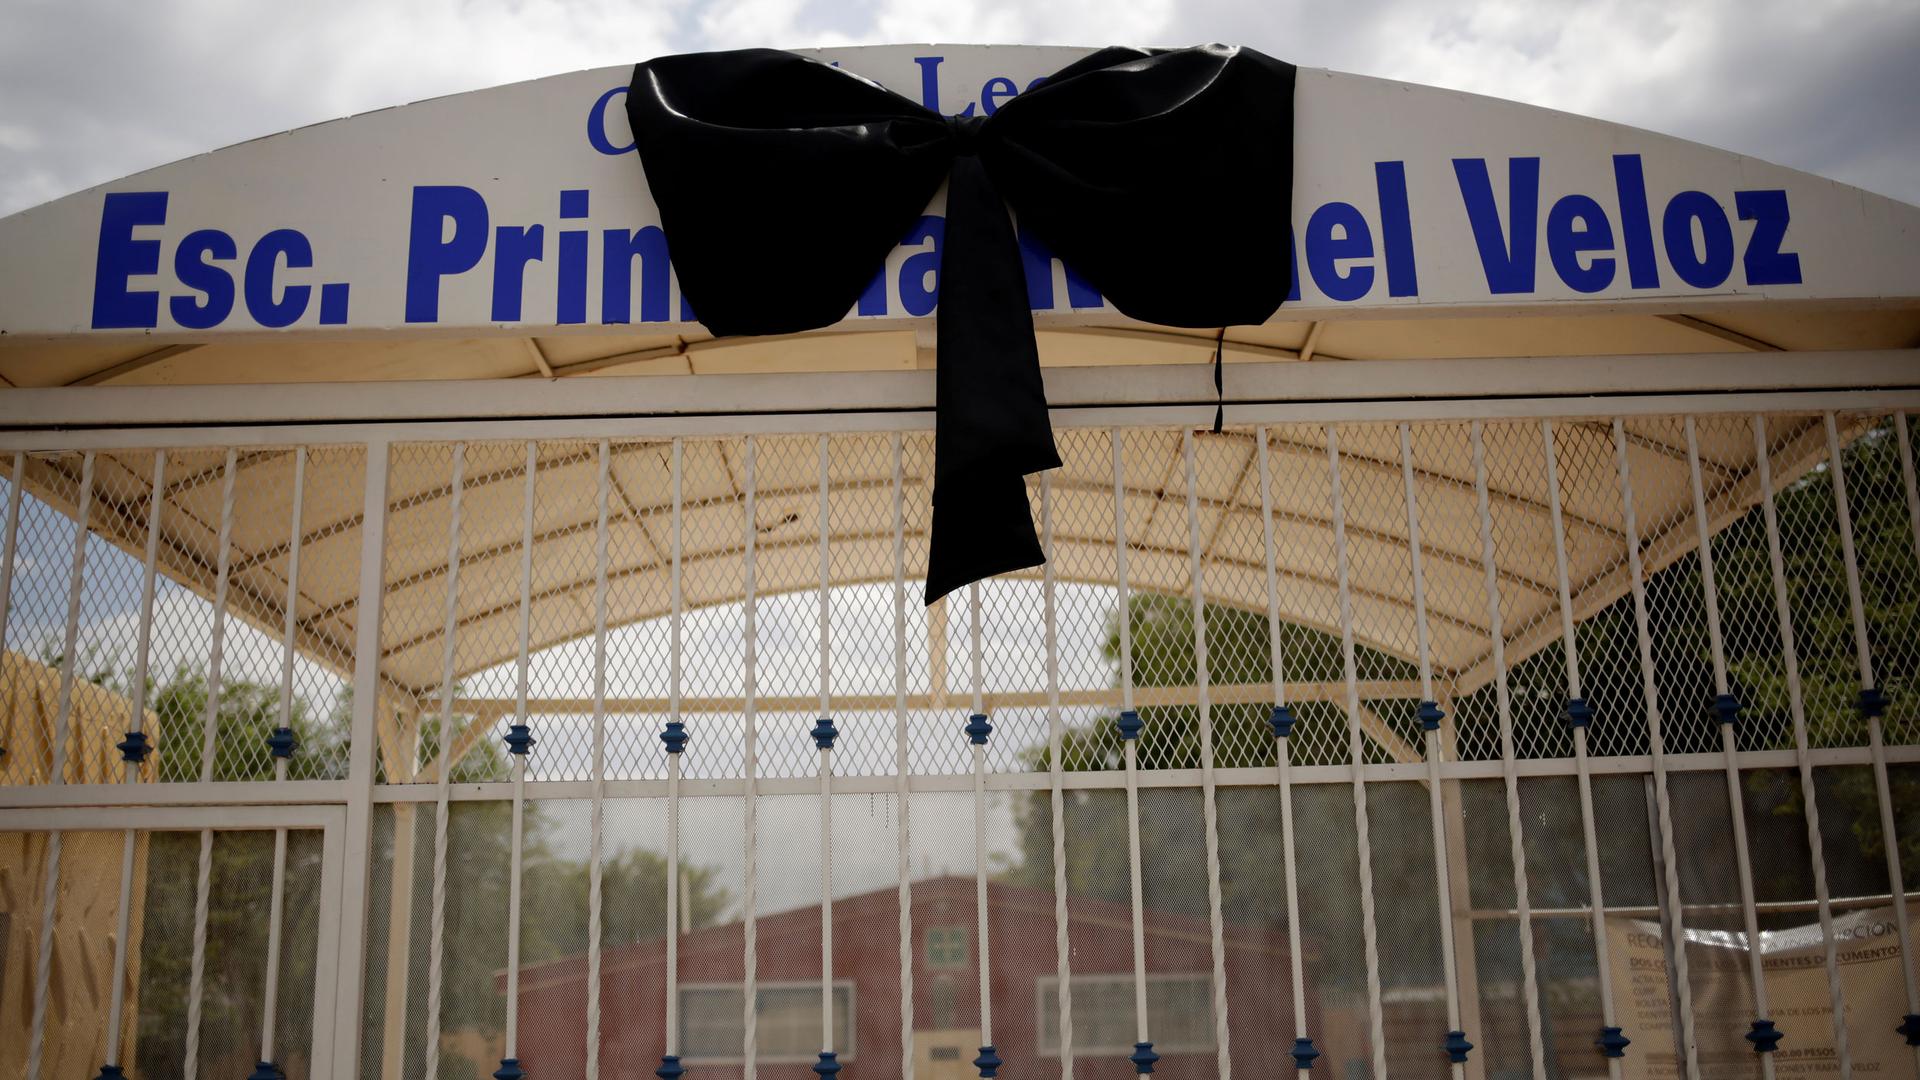 A big black ribbon adorns the gate of the Rafael Veloz elementary school in Ciudad Juárez, Mexico.